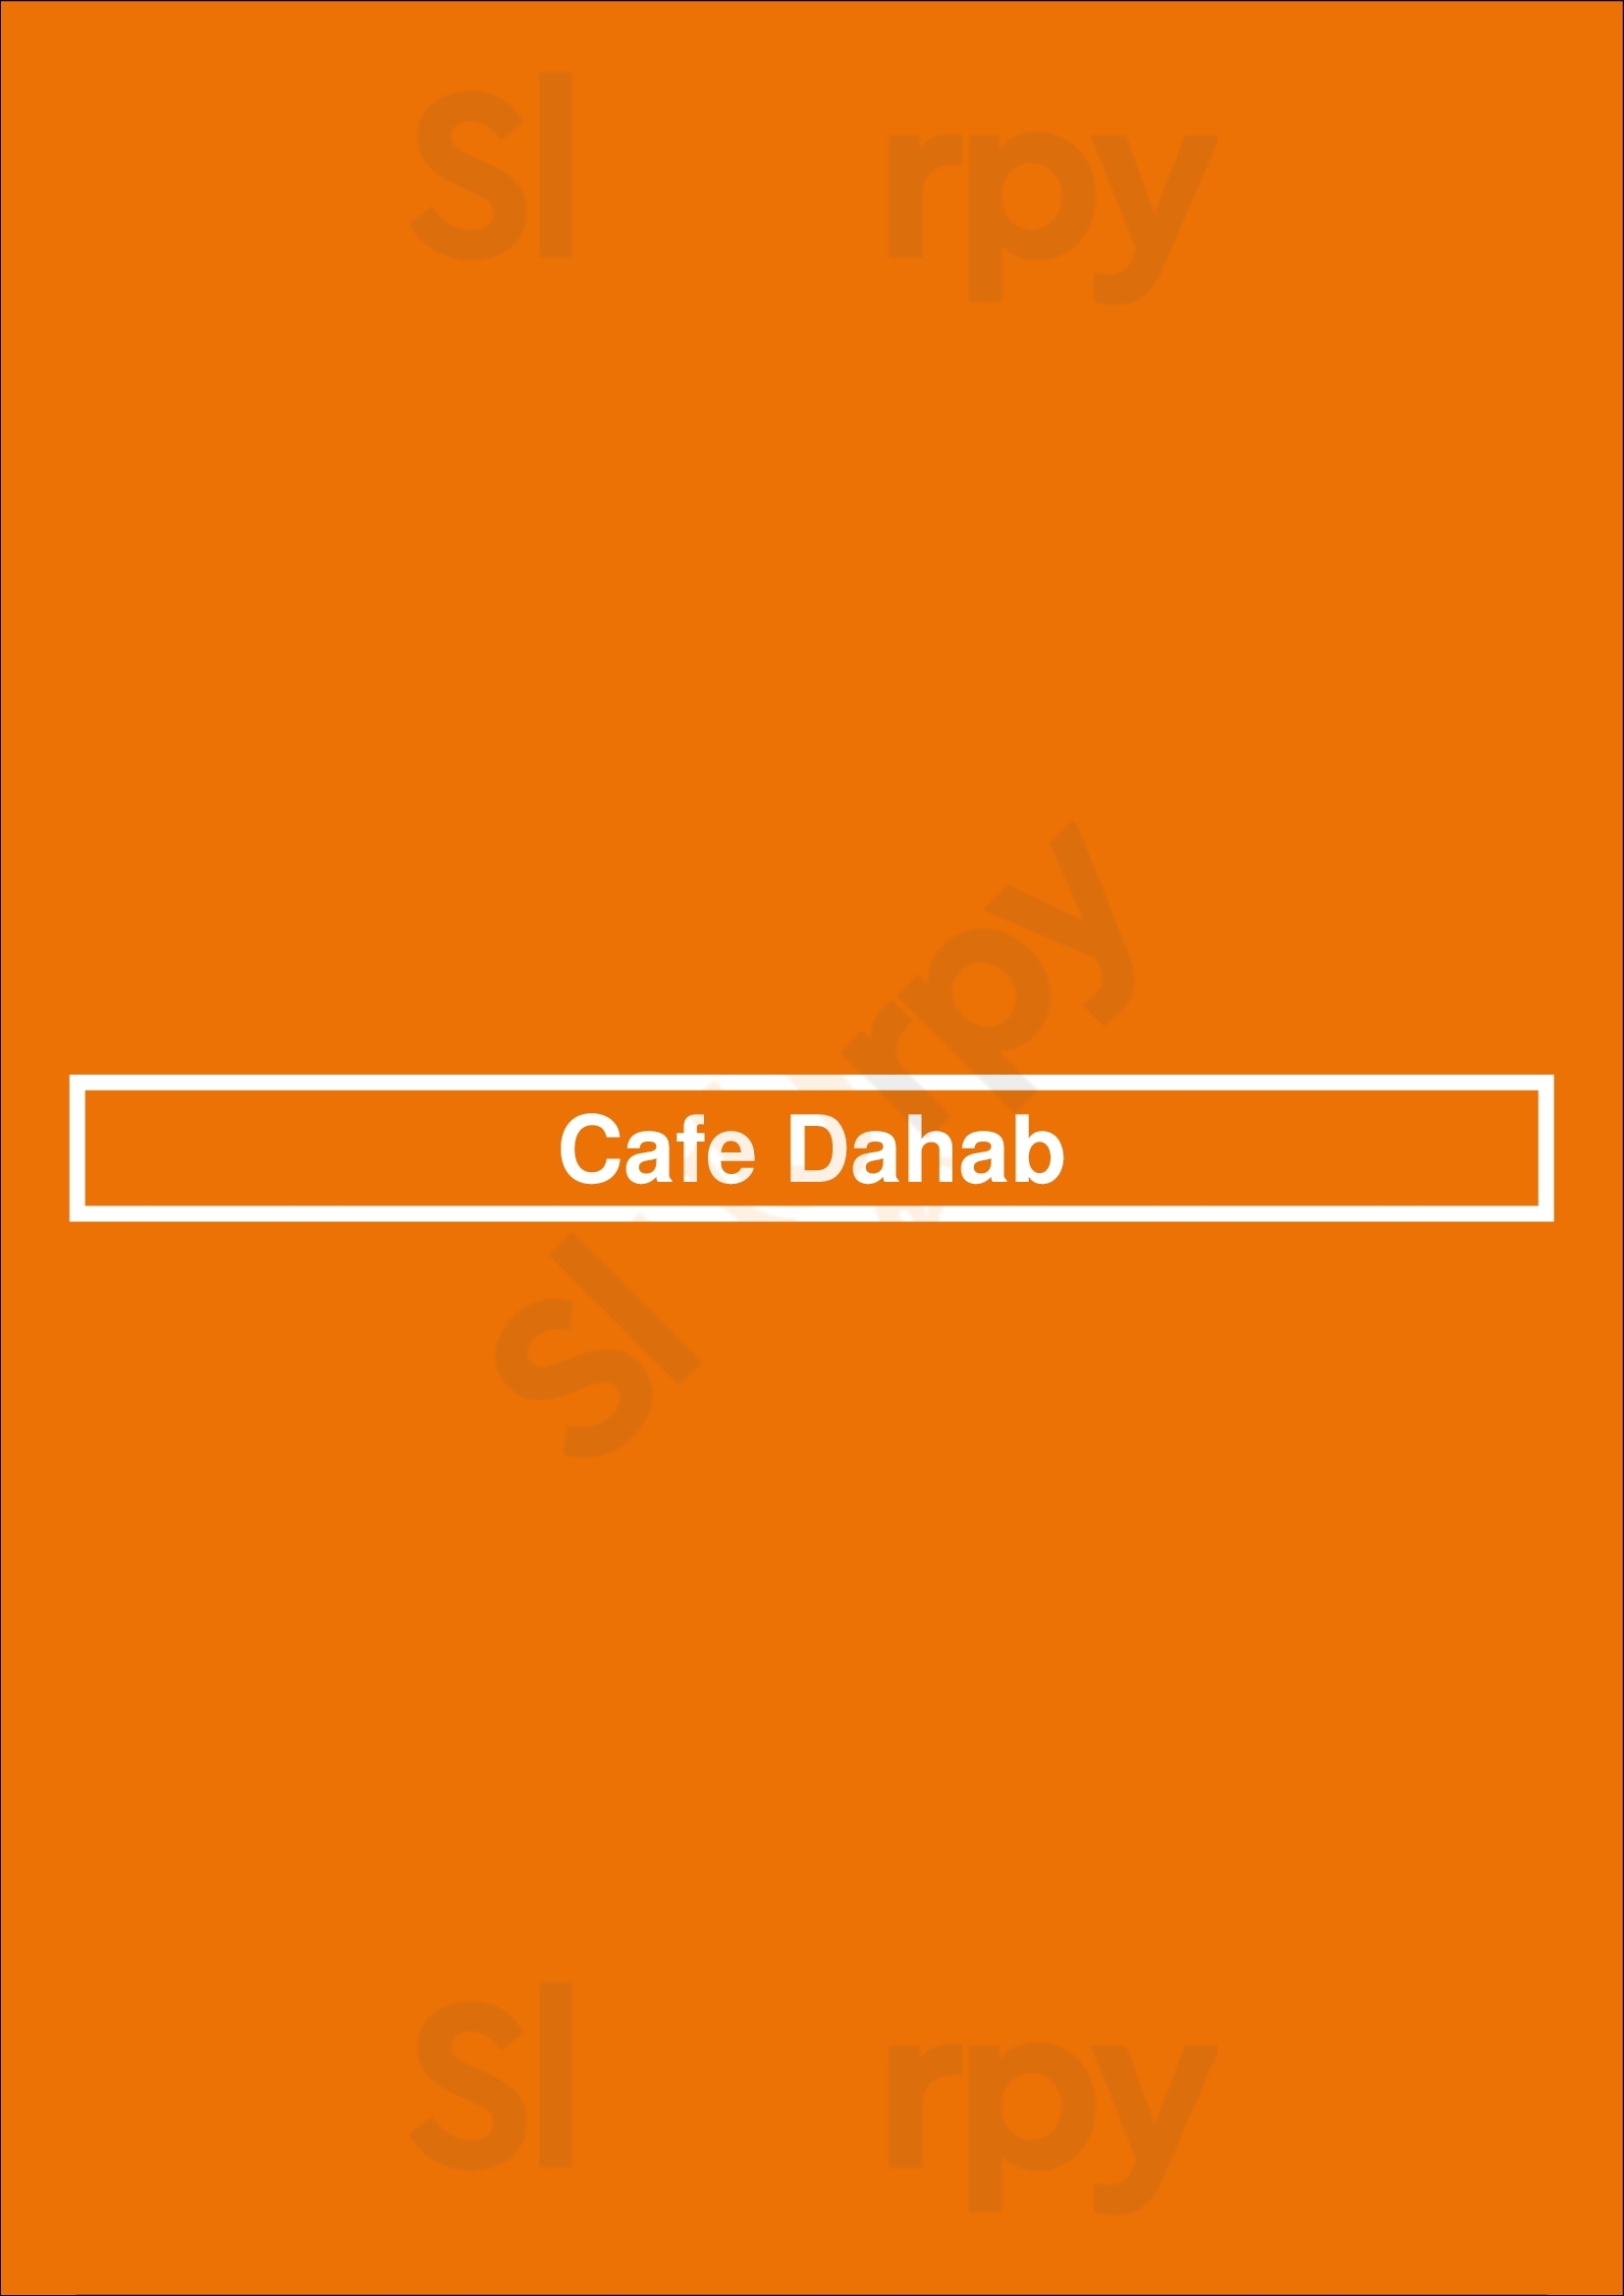 Cafe Dahab Los Angeles Menu - 1